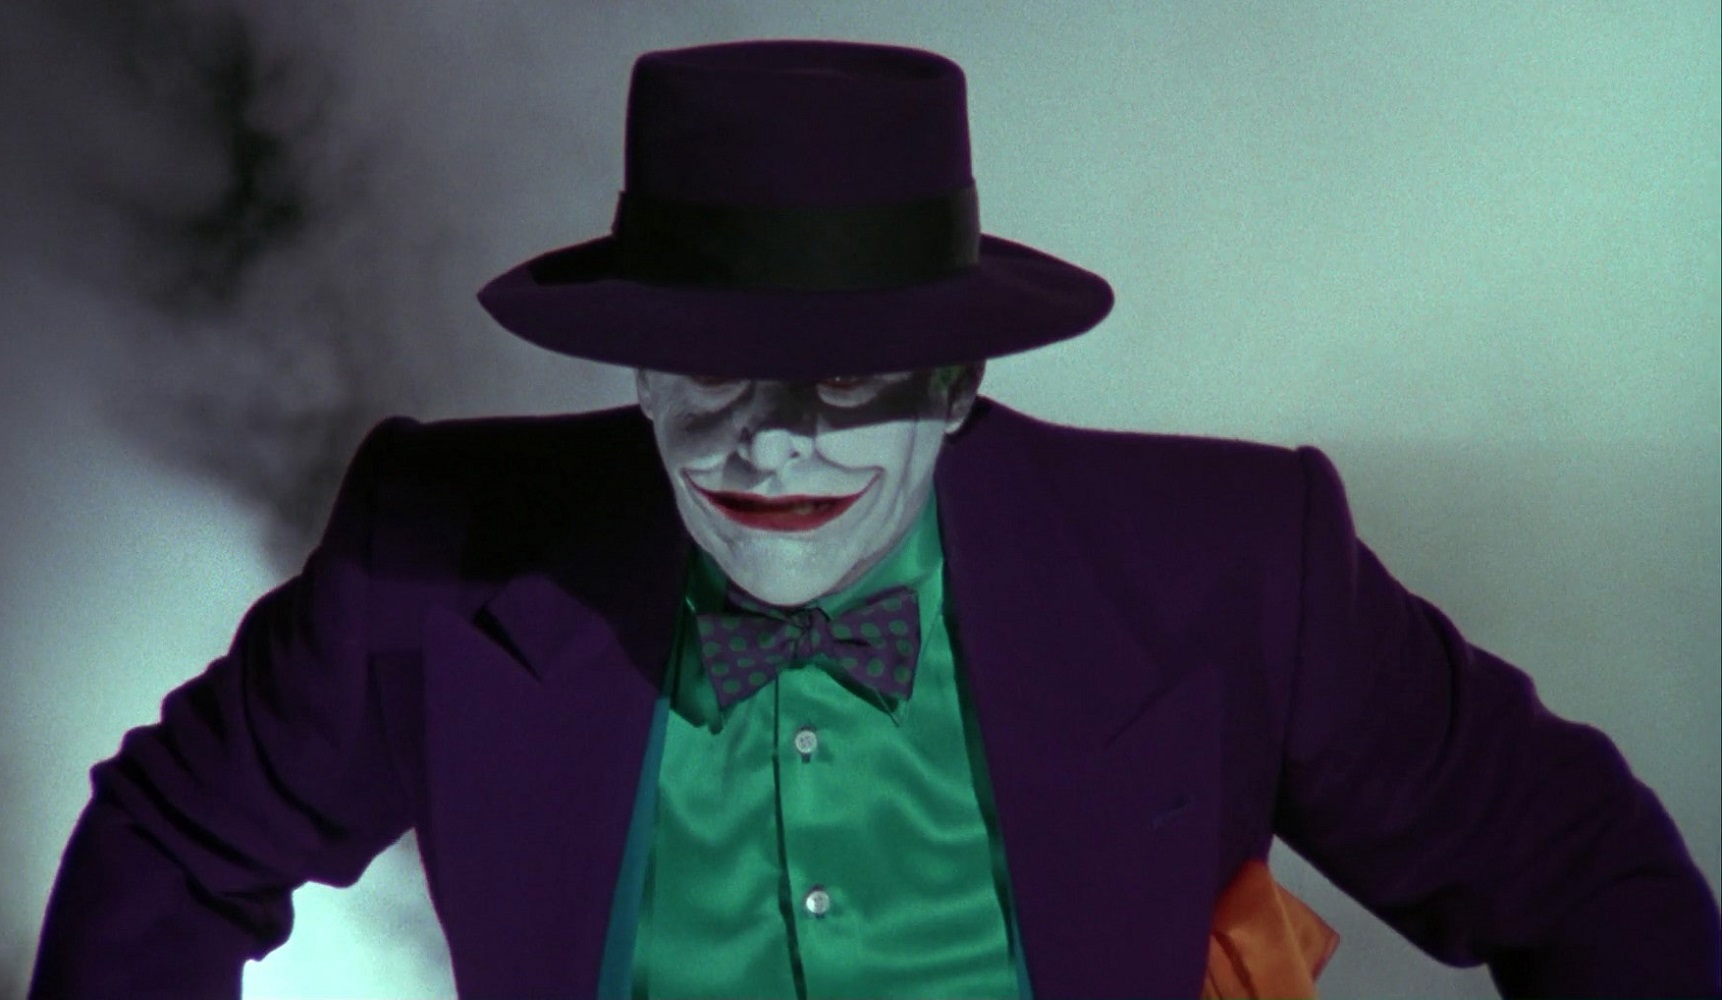 Joker costume - shirt